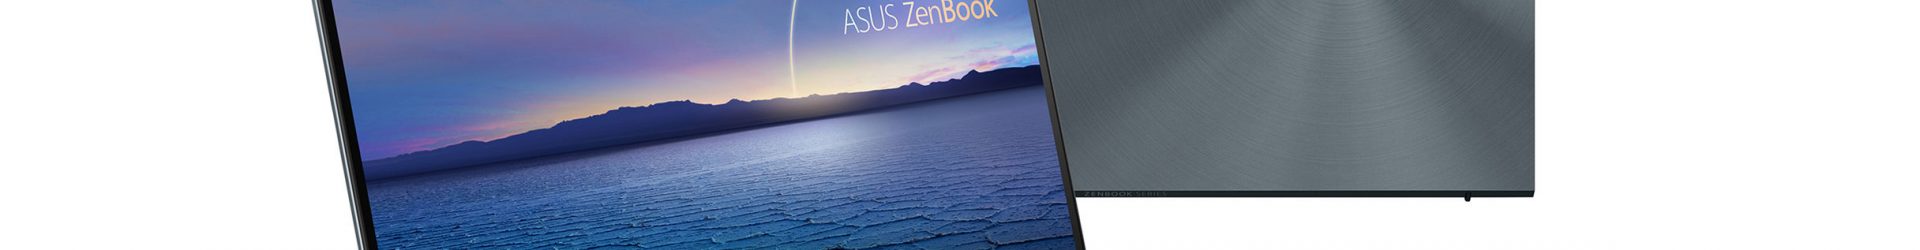 Asus ZenBook Pro 15 UX535